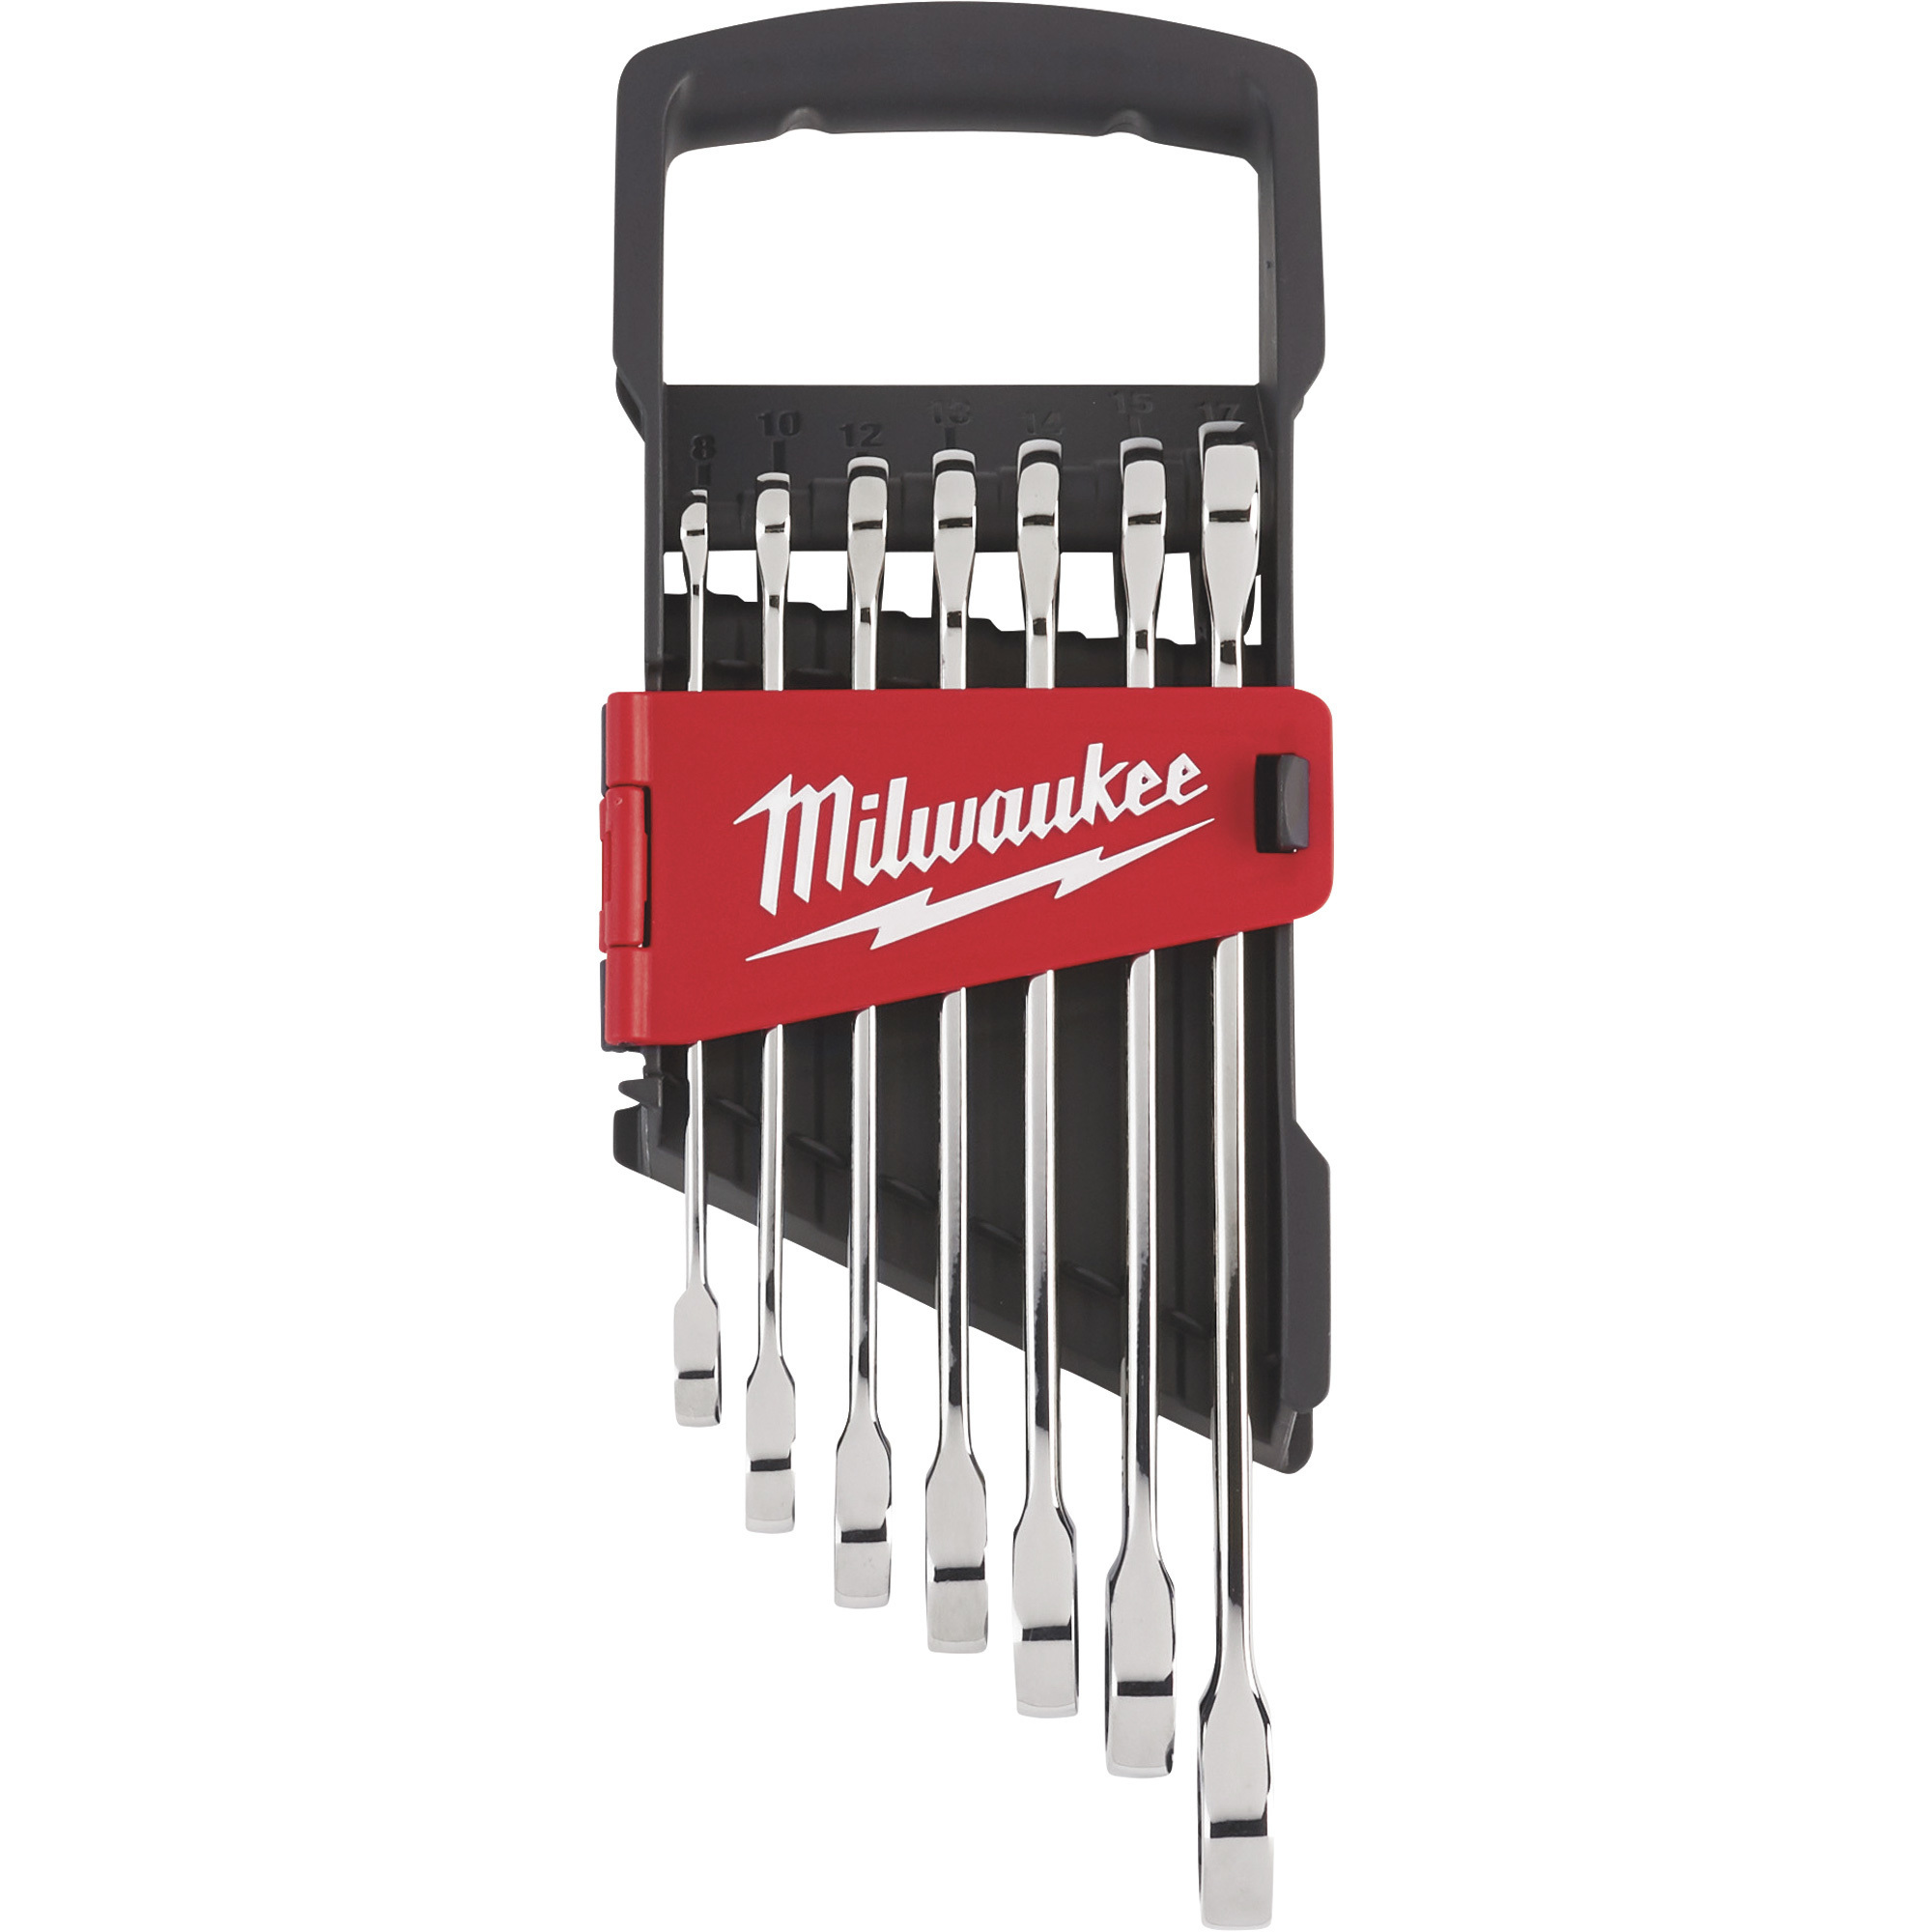 Milwaukee Ratcheting Combination Wrench Set, 7-Piece, Metric, Model 48-22-9506